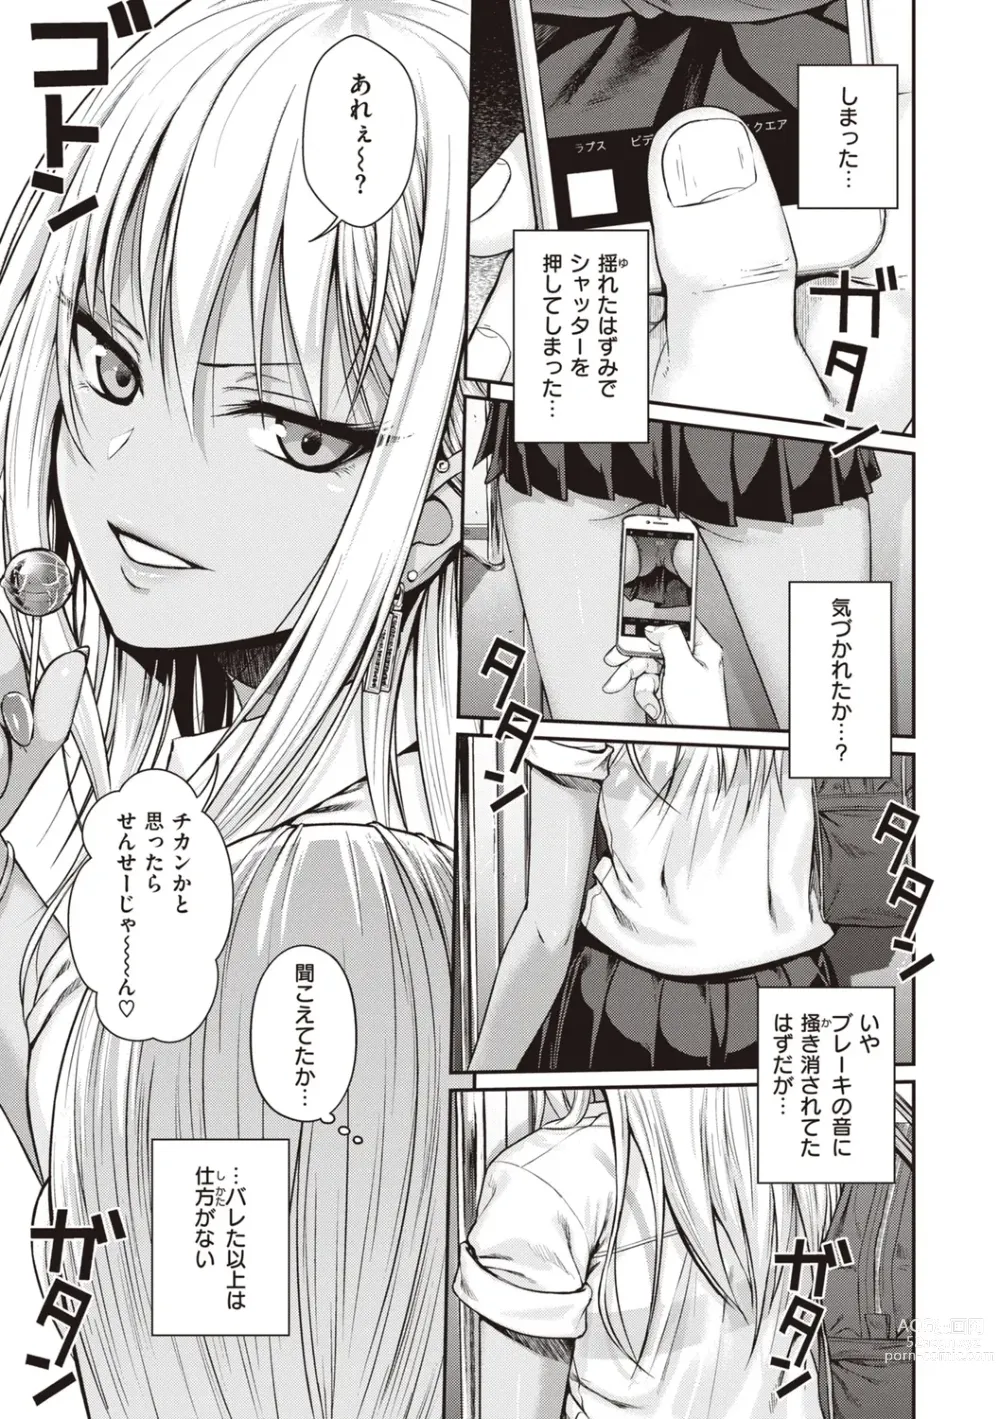 Page 9 of manga Prototype Teens